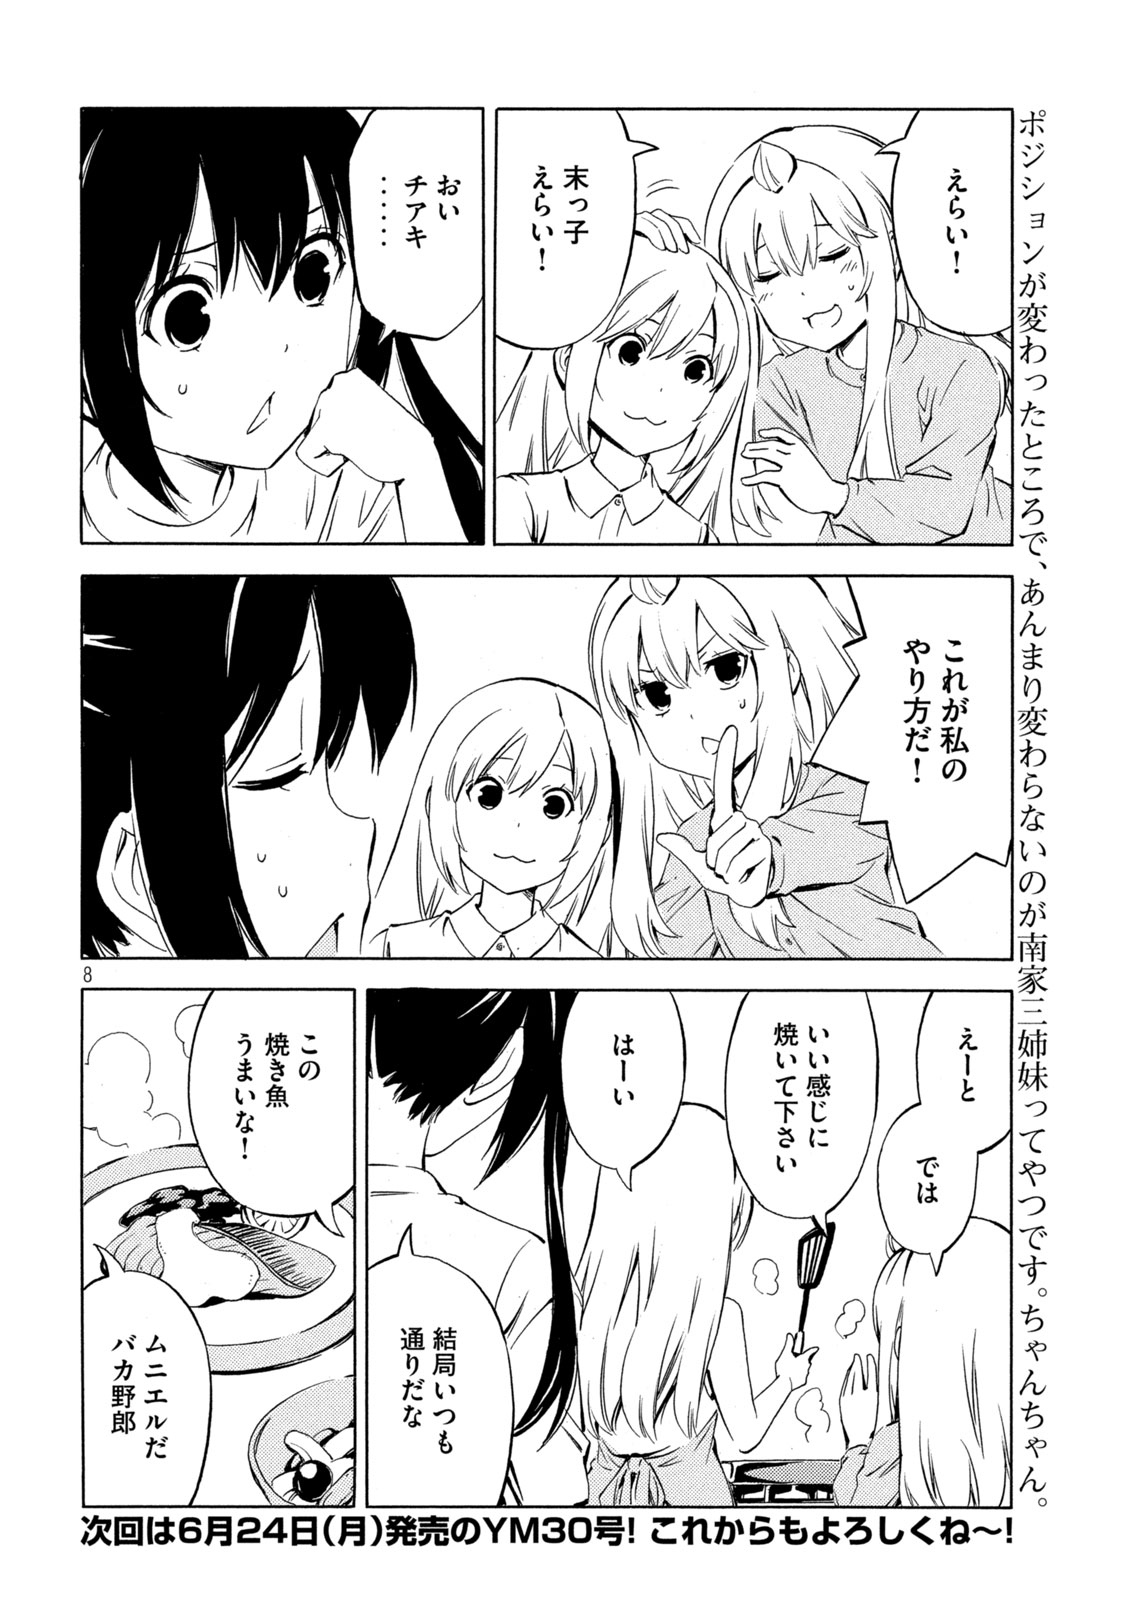 Minami-ke - Chapter 485 - Page 8